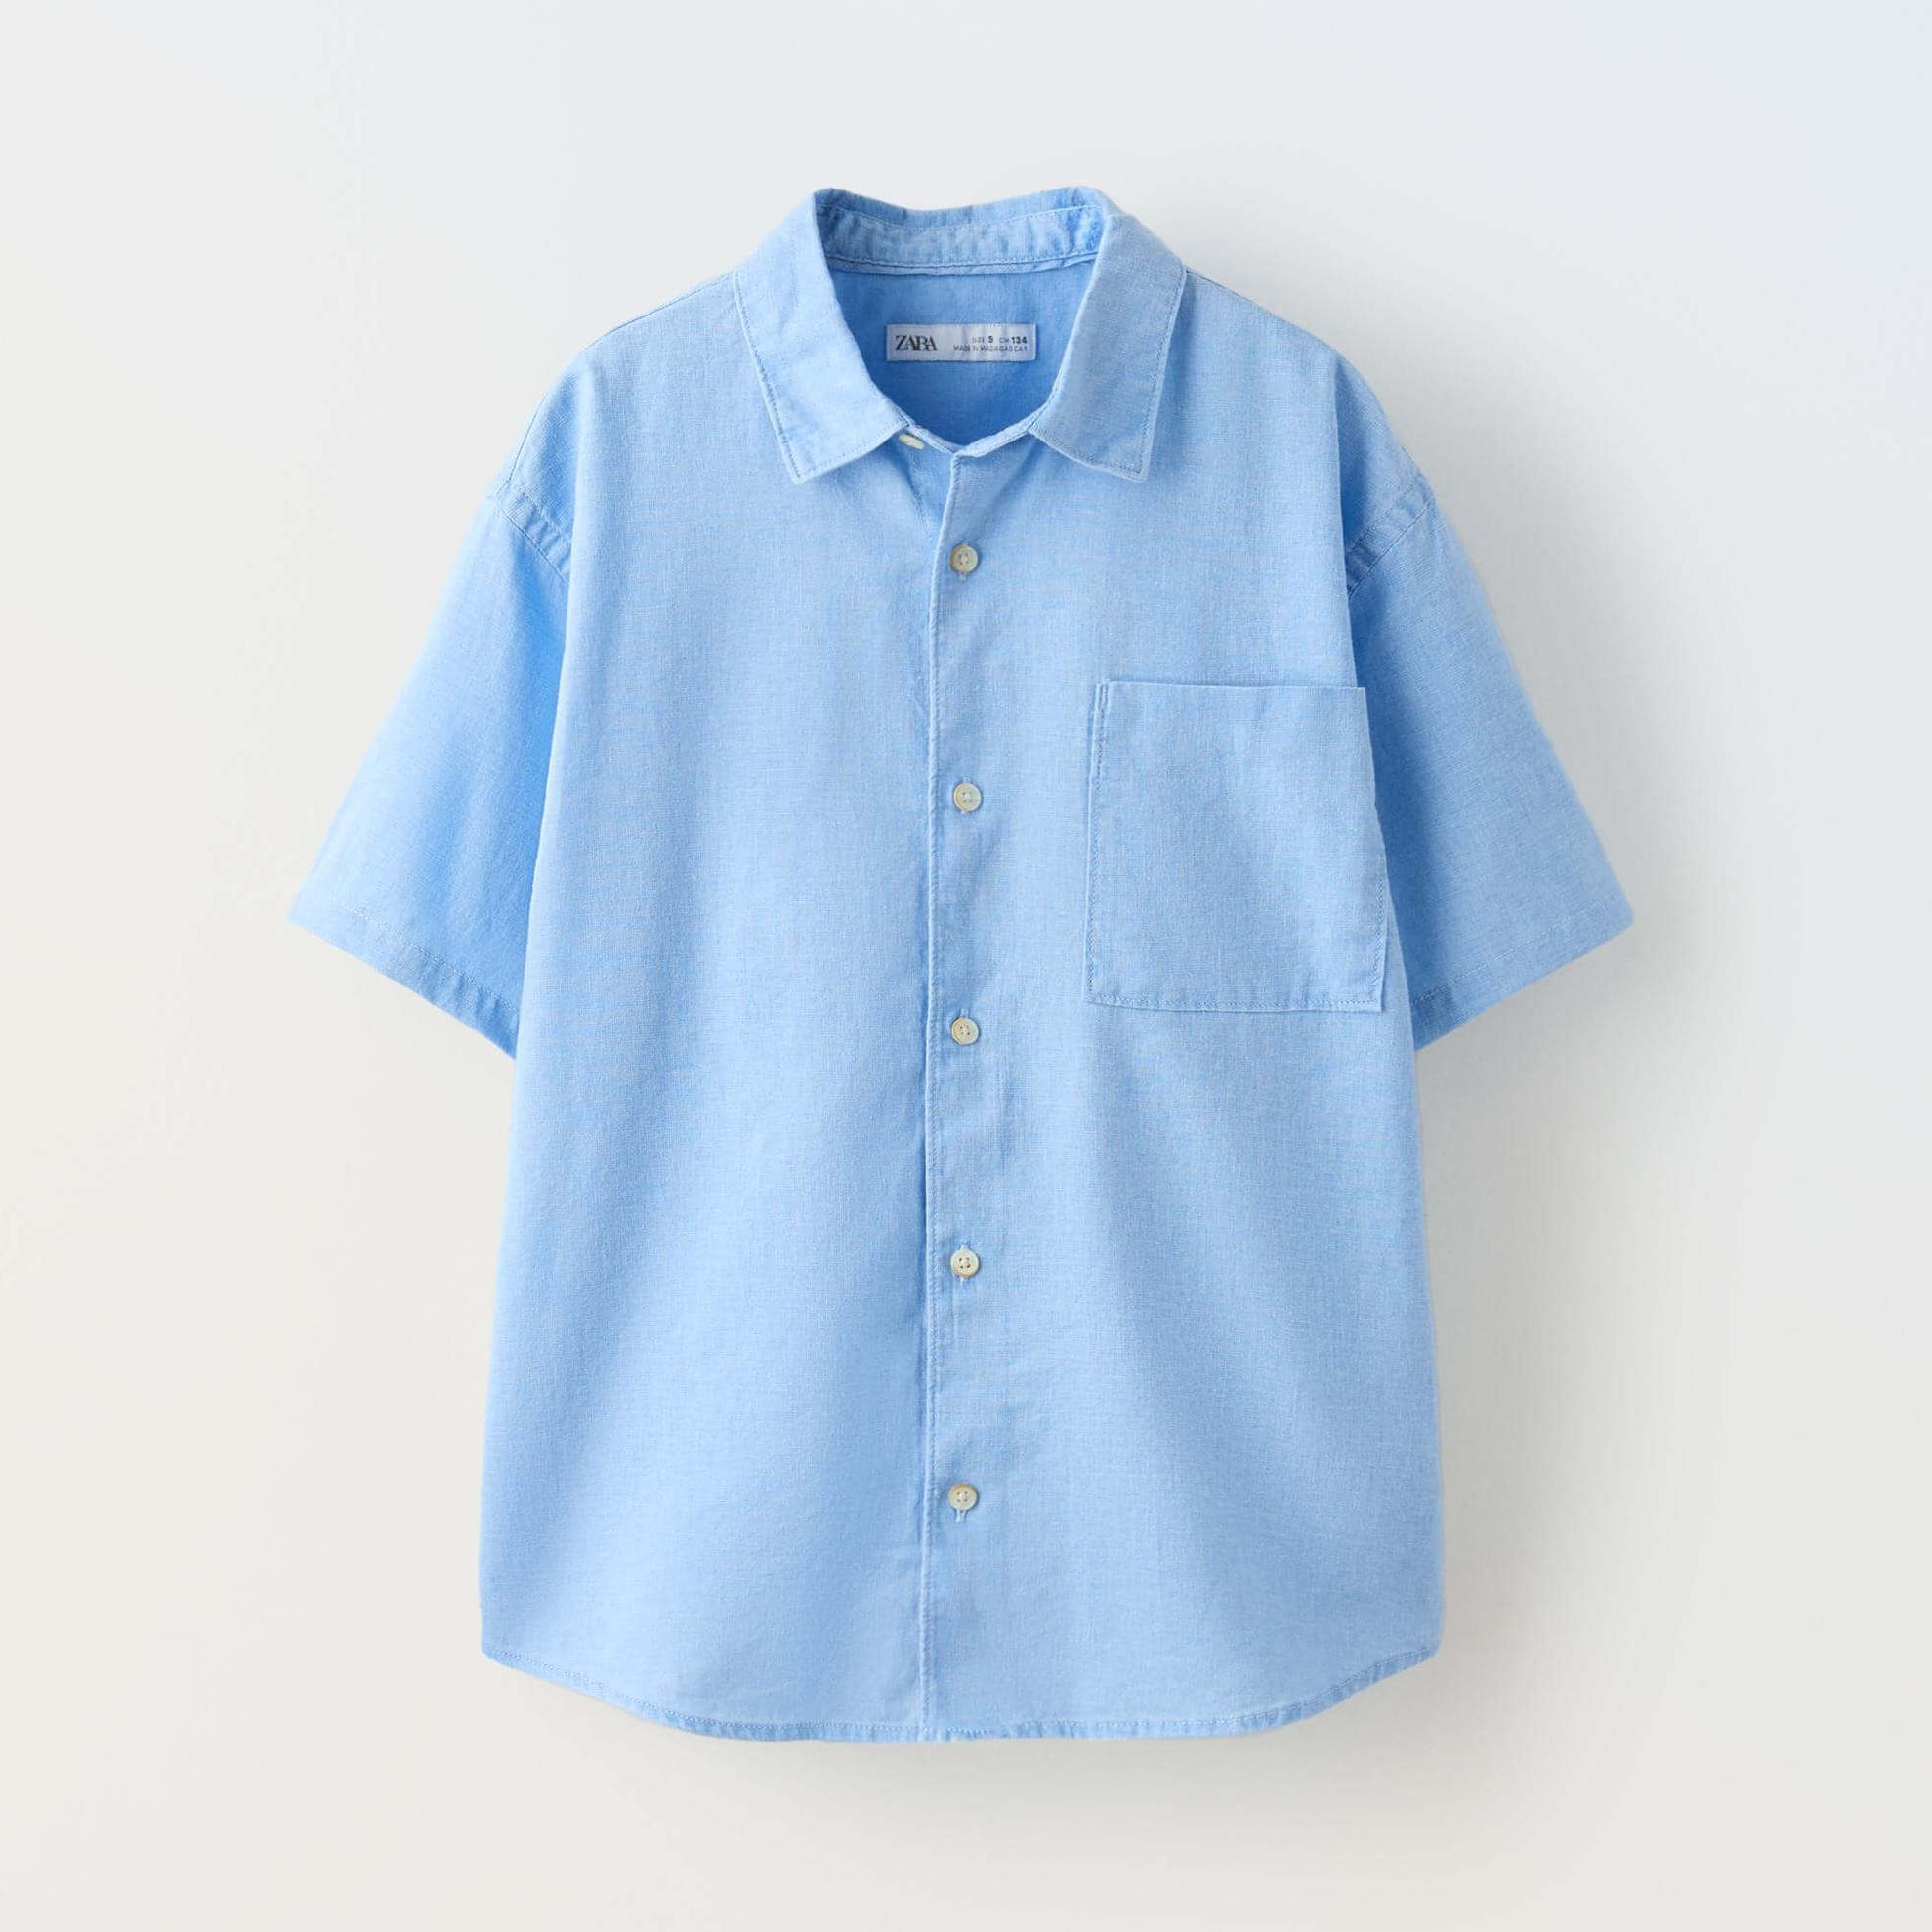 Рубашка Zara Linen And Cotton Blend, синий рубашка zara striped linen cotton blend бирюзовый белый